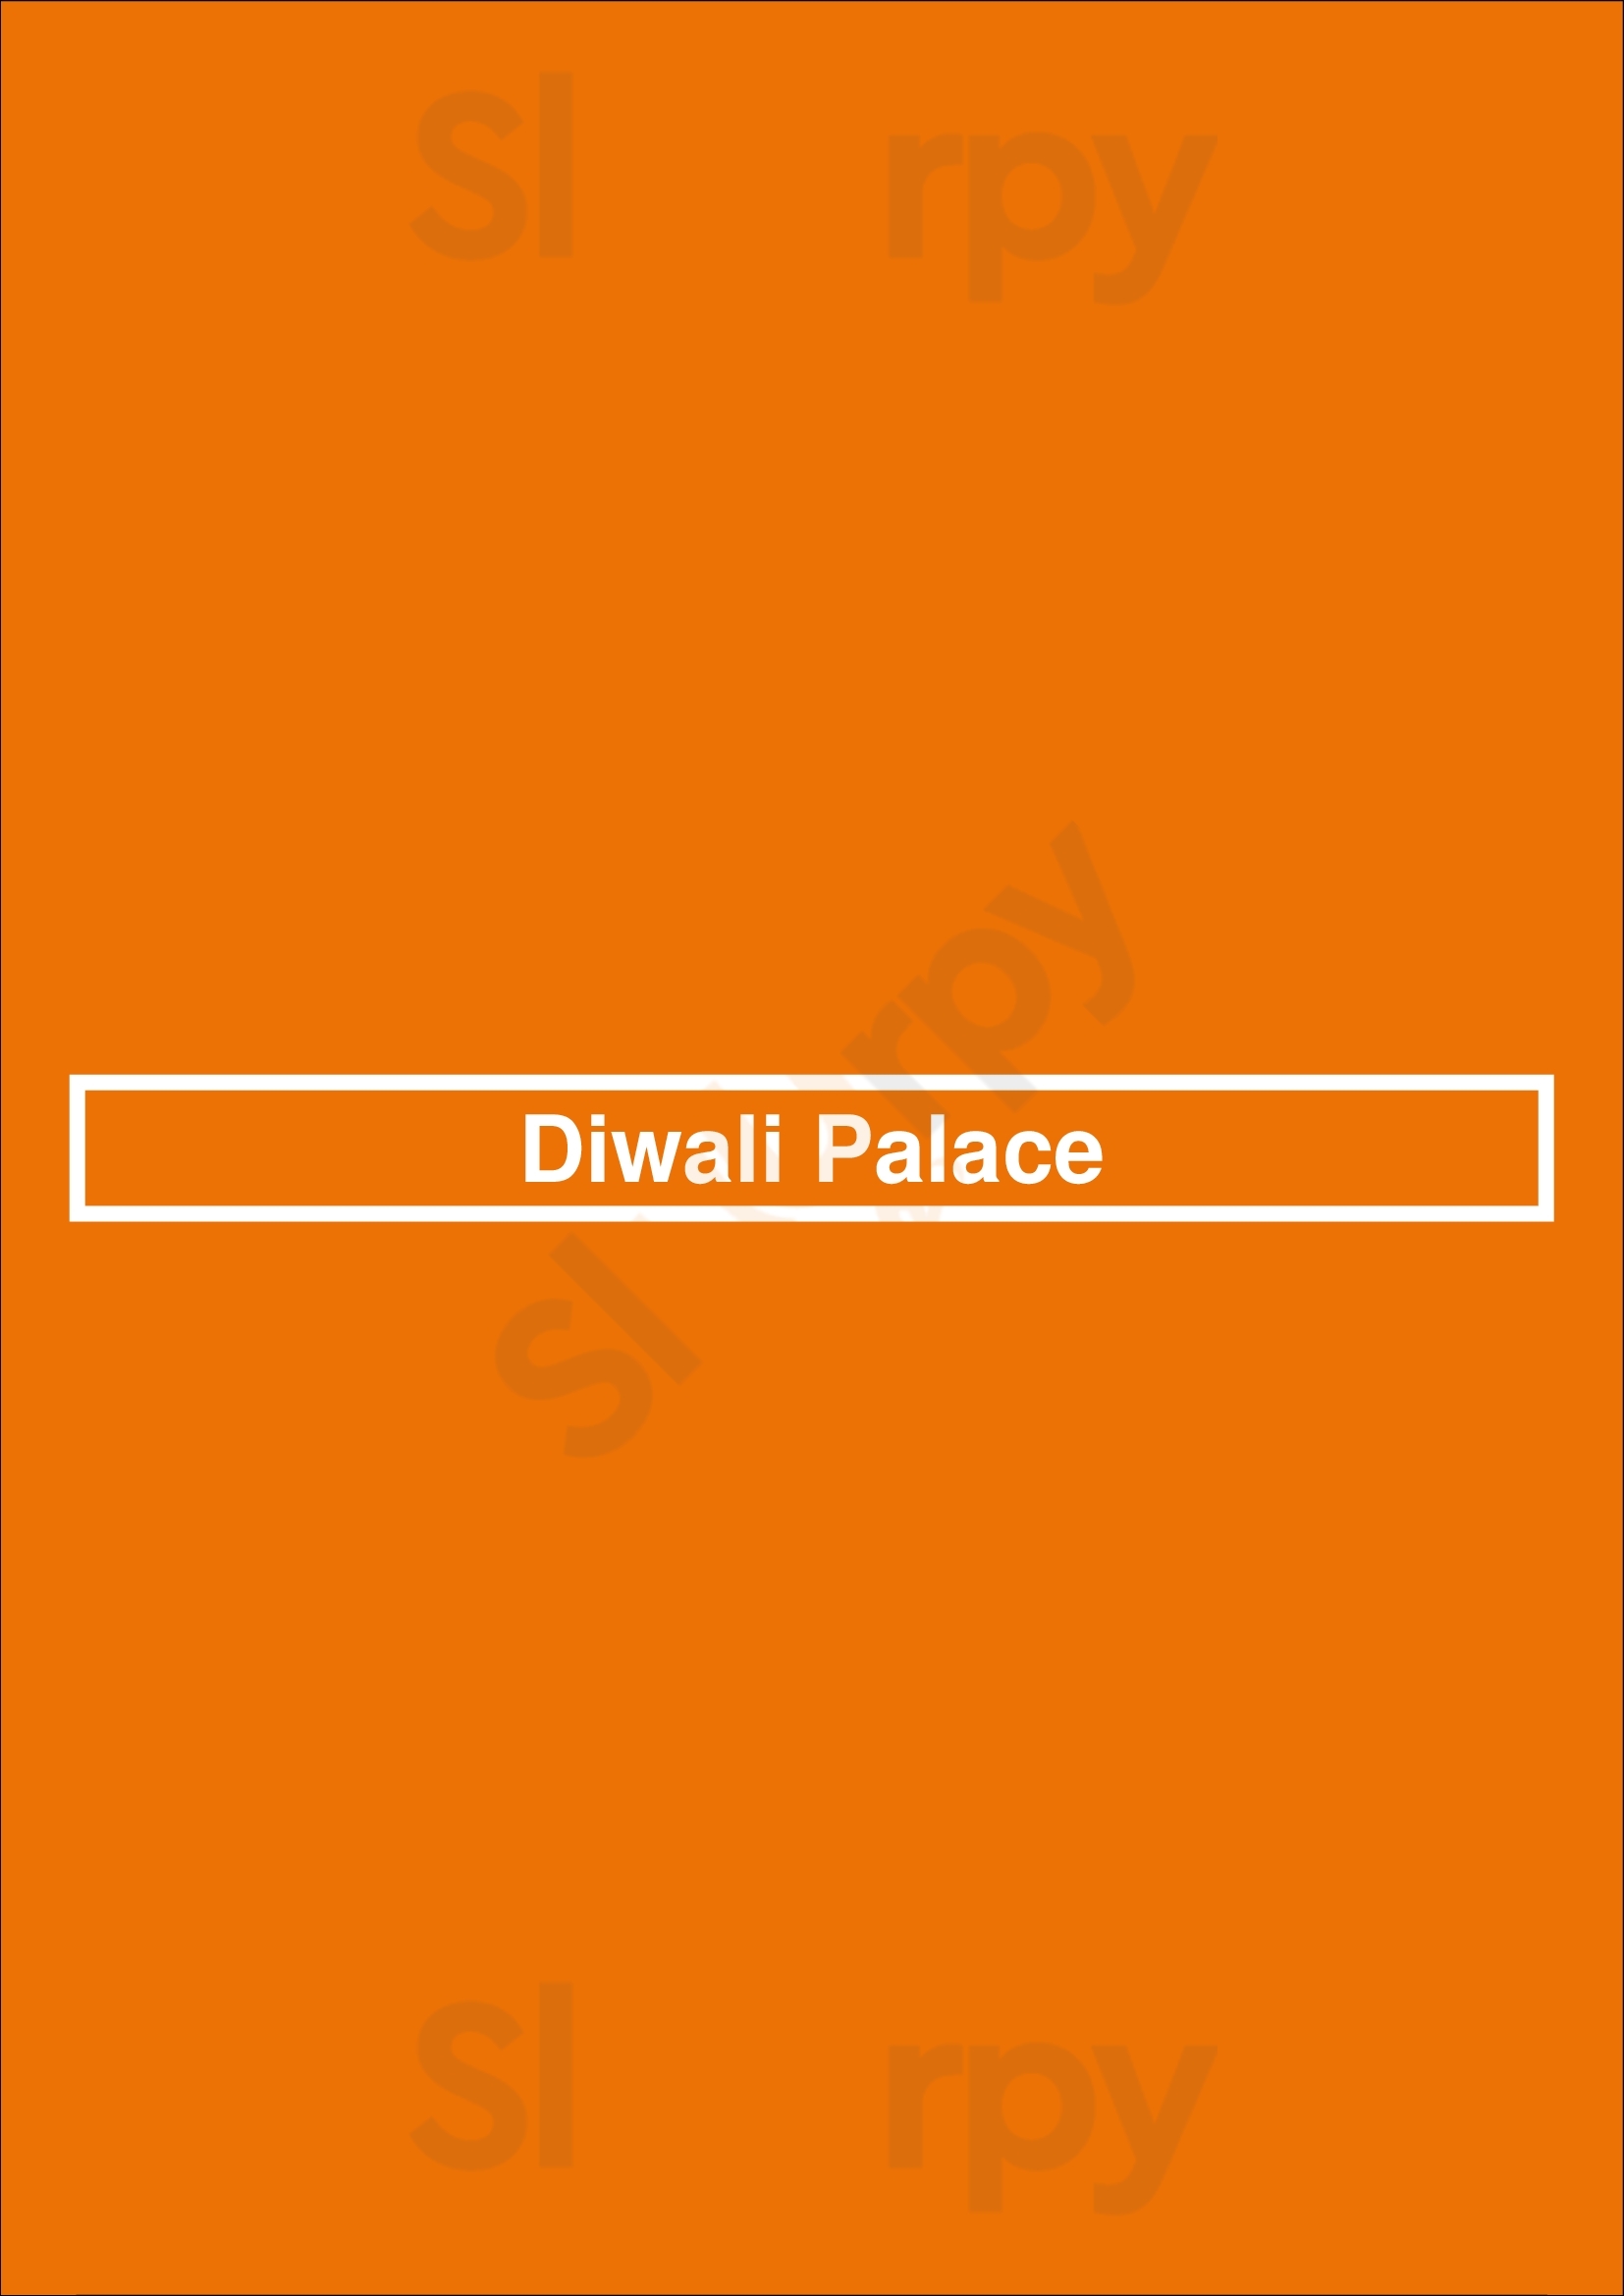 Diwali Palace Amstelveen Menu - 1